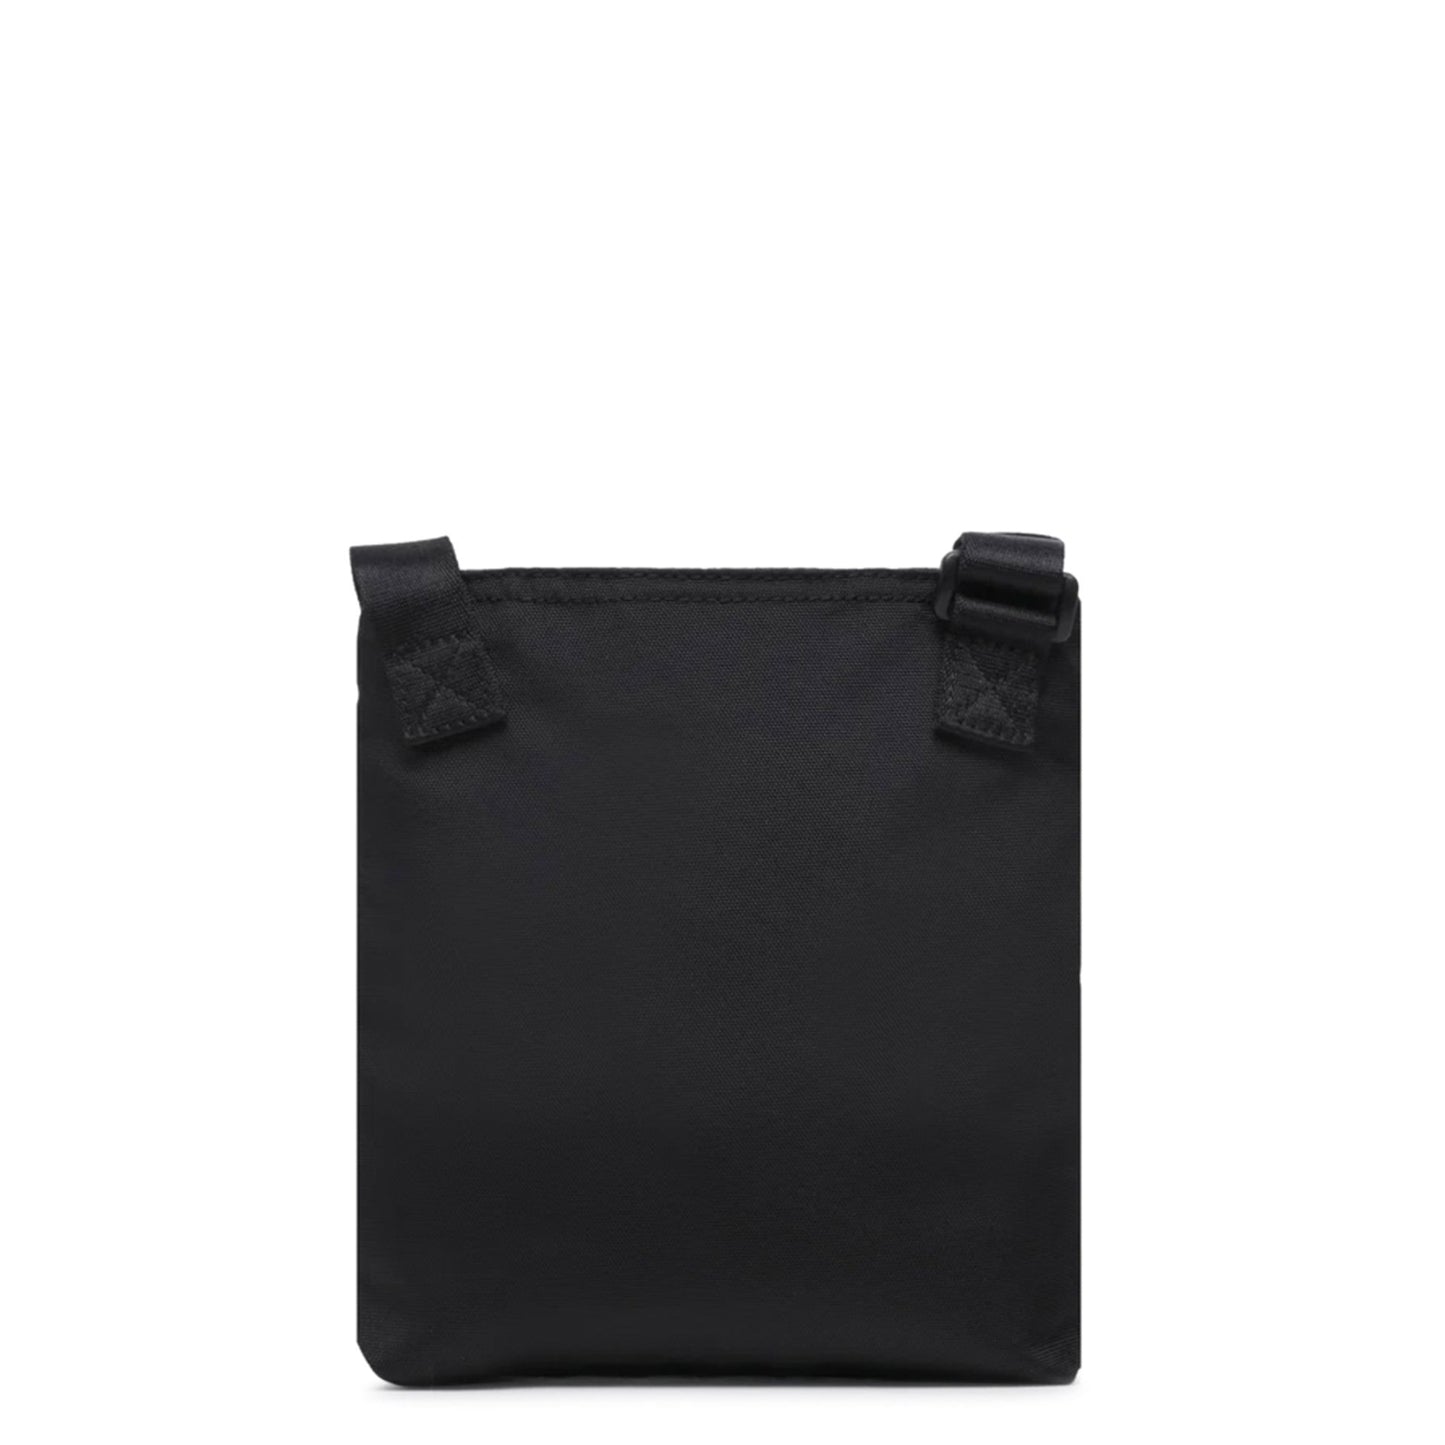 Calvin Klein shoulder bags 